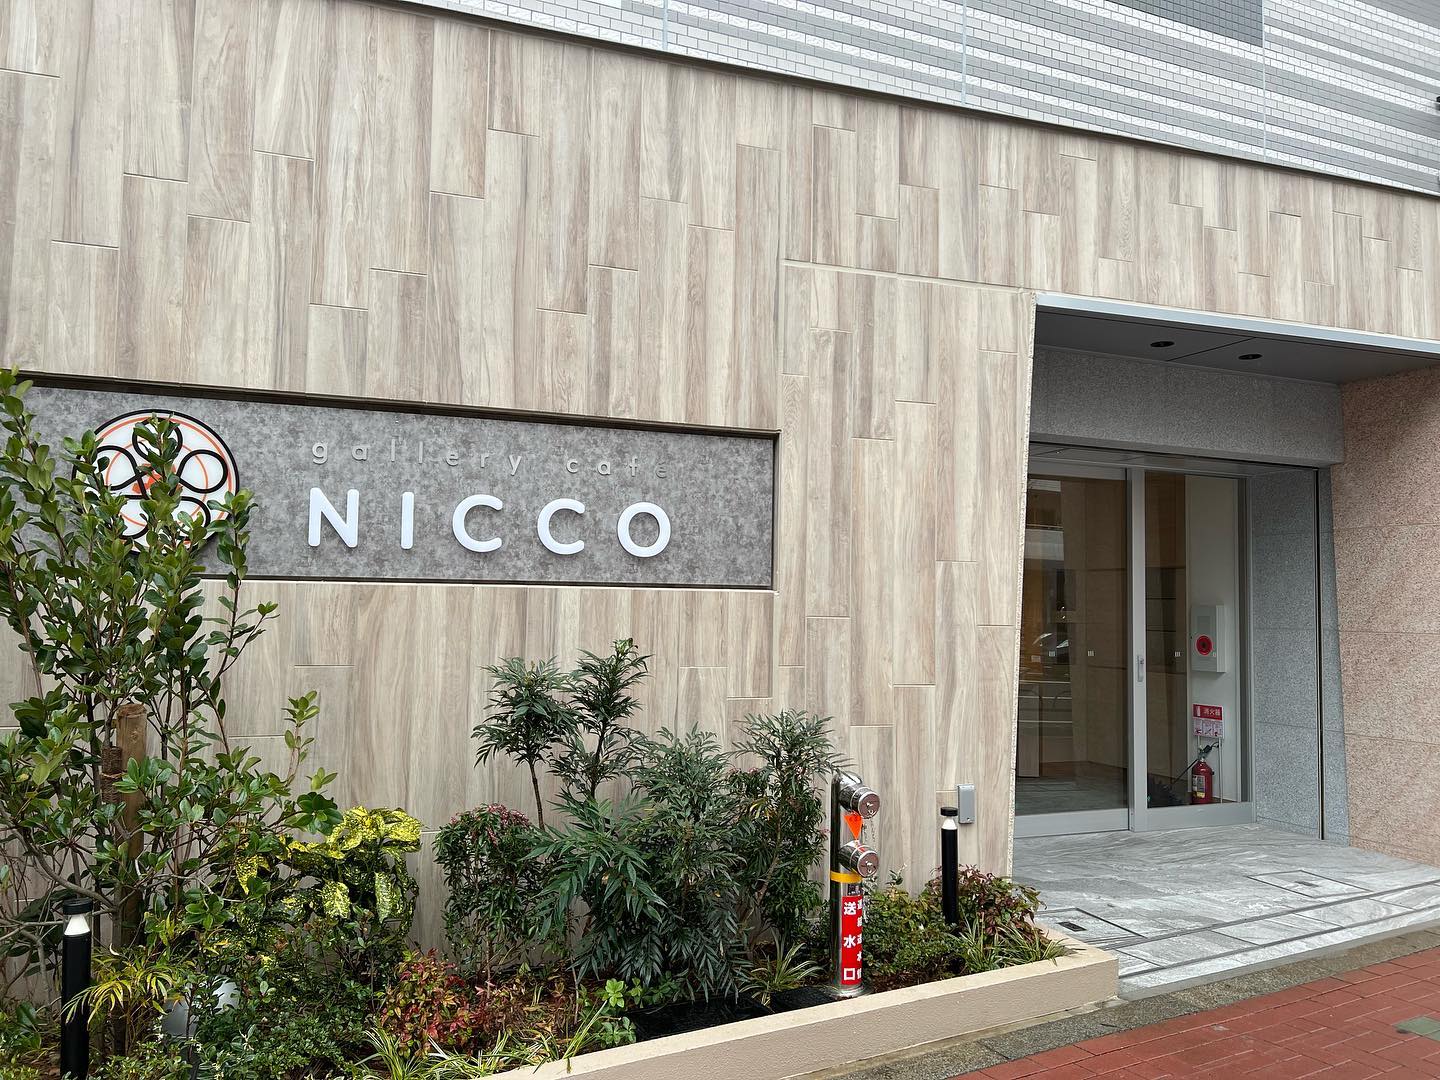 Gallery café NICCO